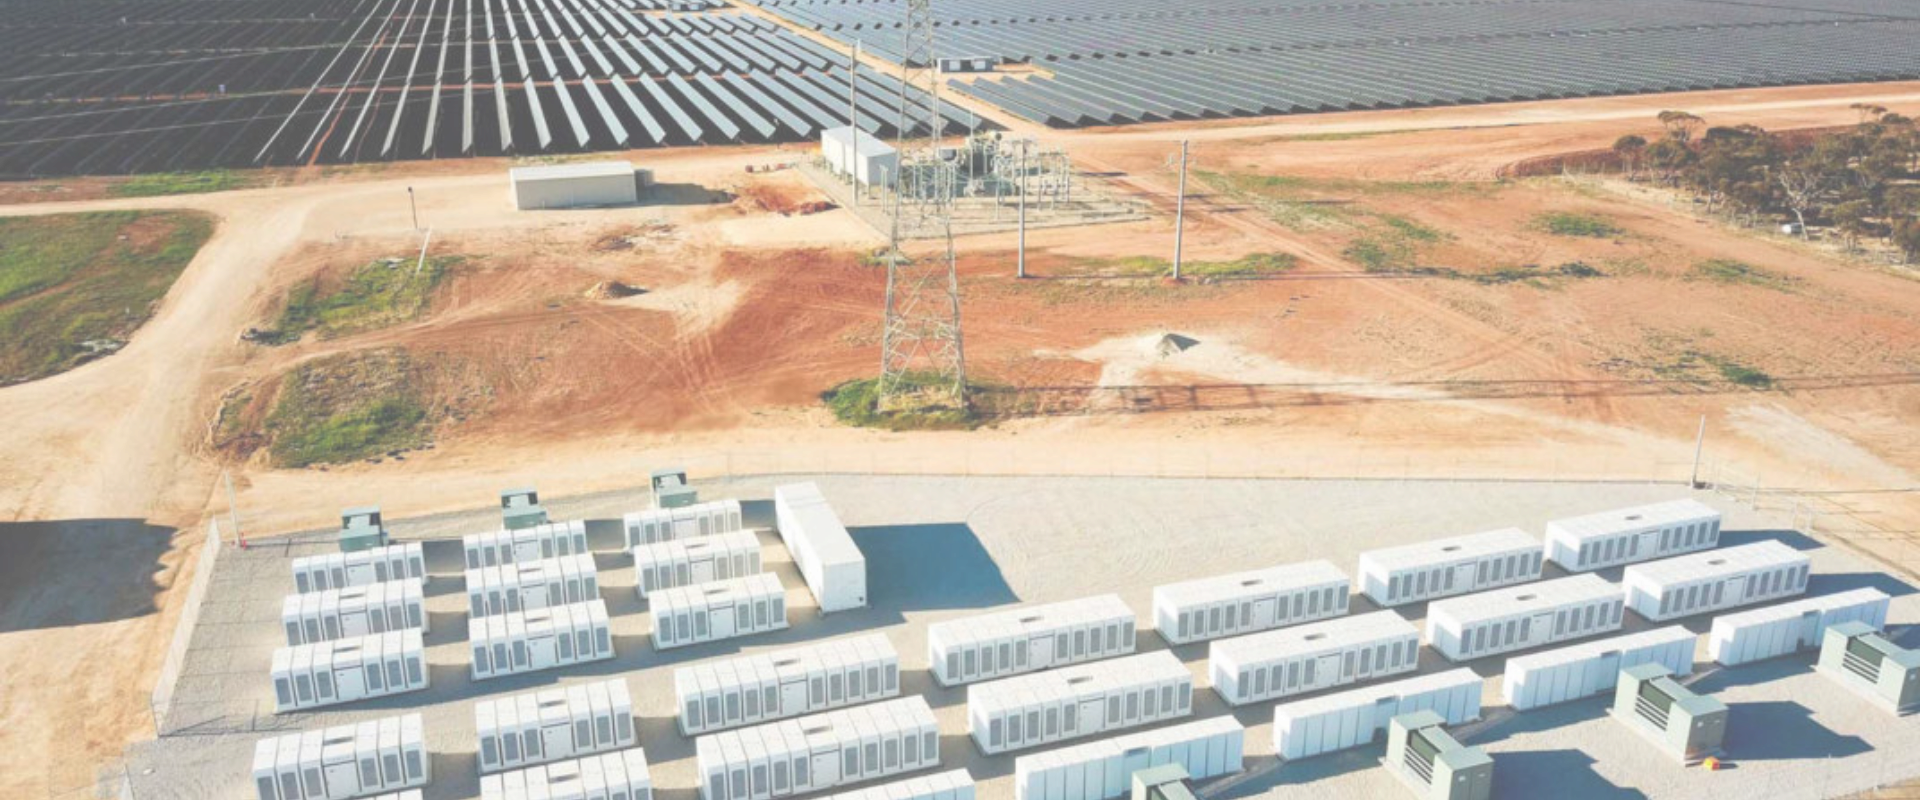 Gannawarra Solar Farm